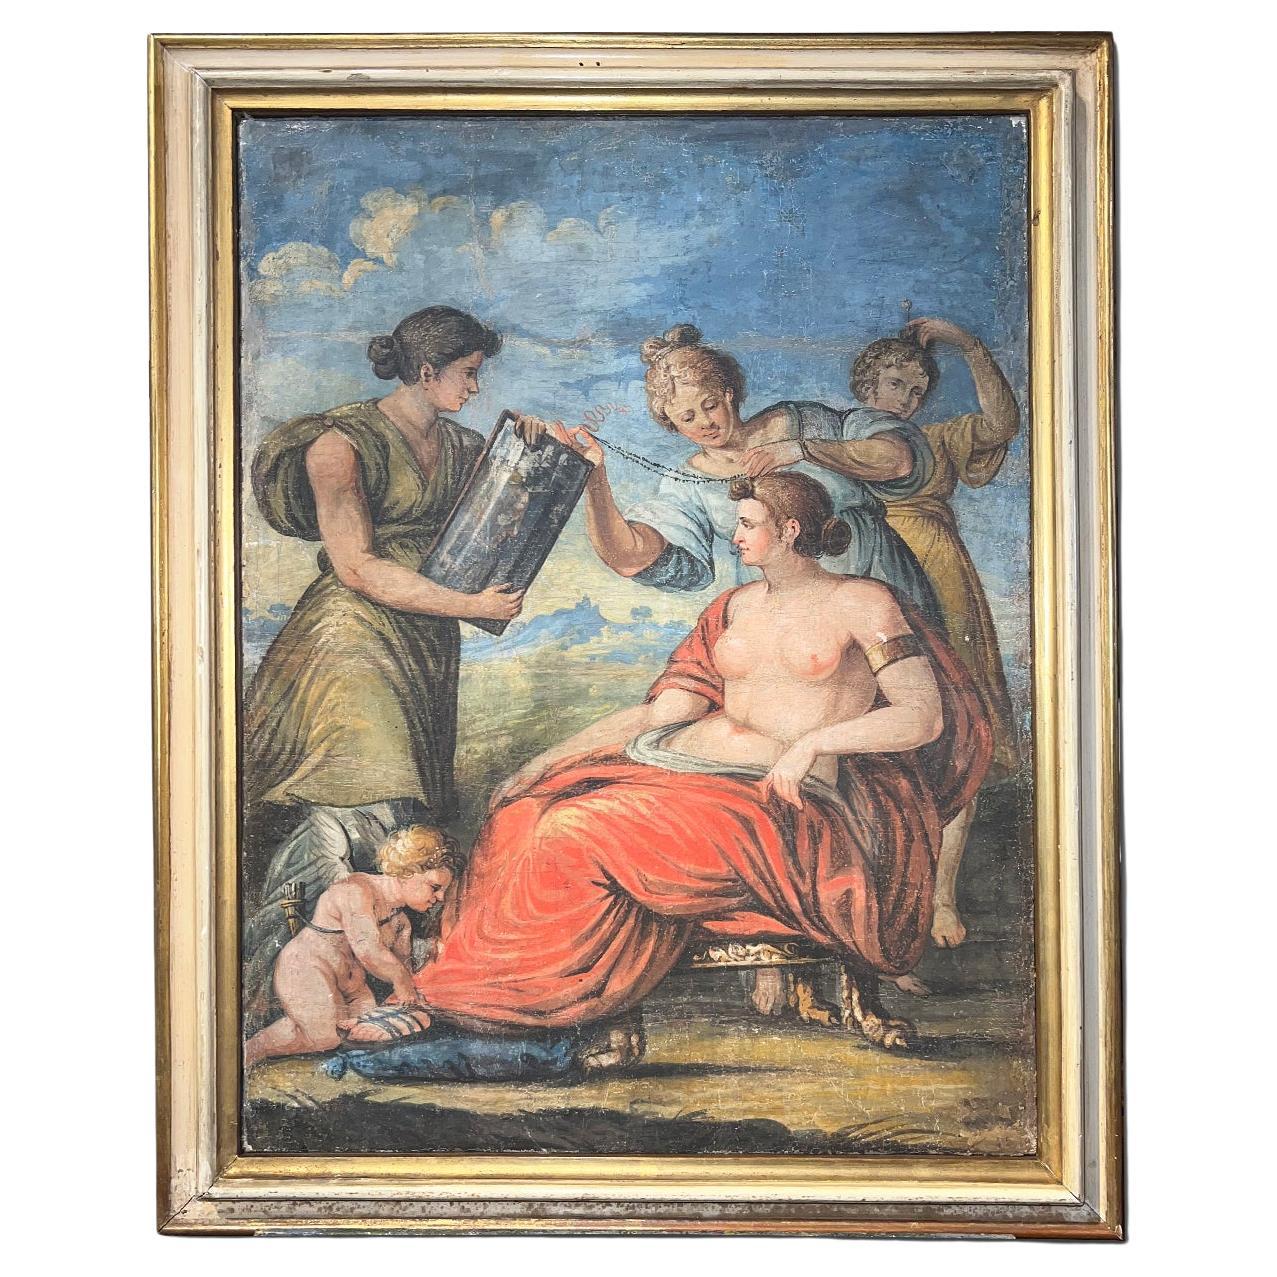 Late 18th Century, Bath of Venus, Tempera on Canvas